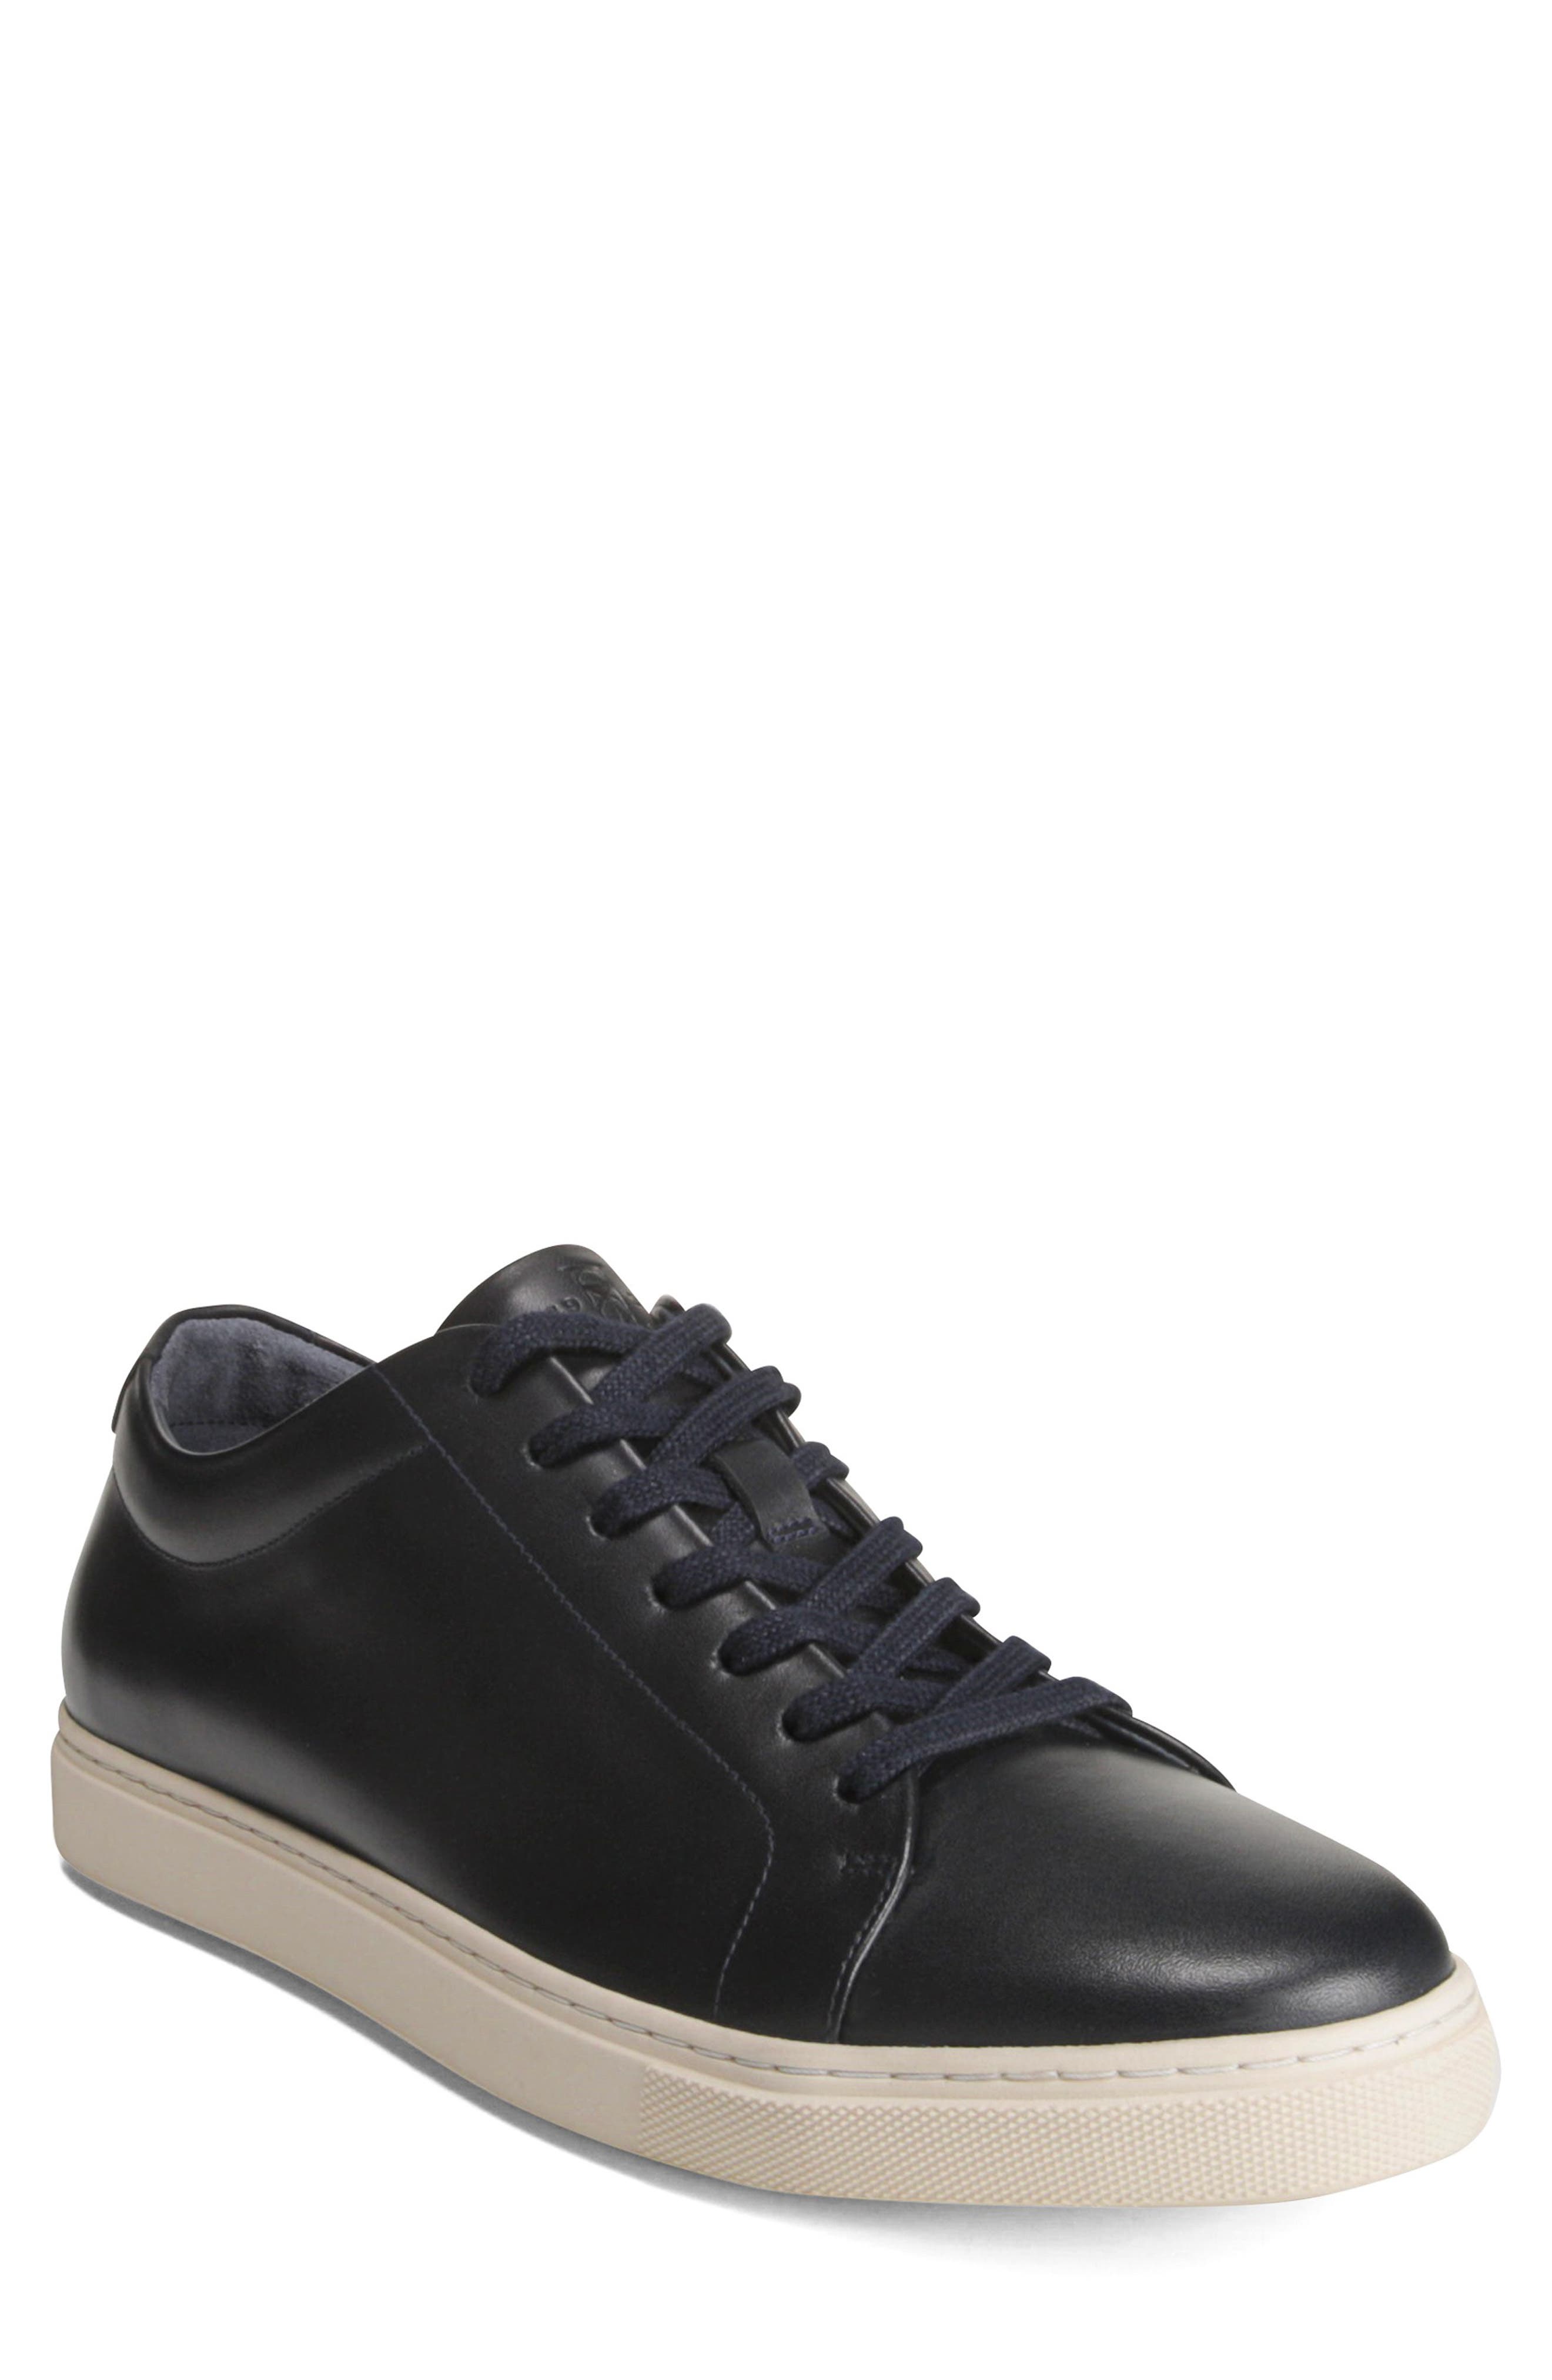 Allen Edmonds - Men's Casual Fashion Shoes and Sneakers